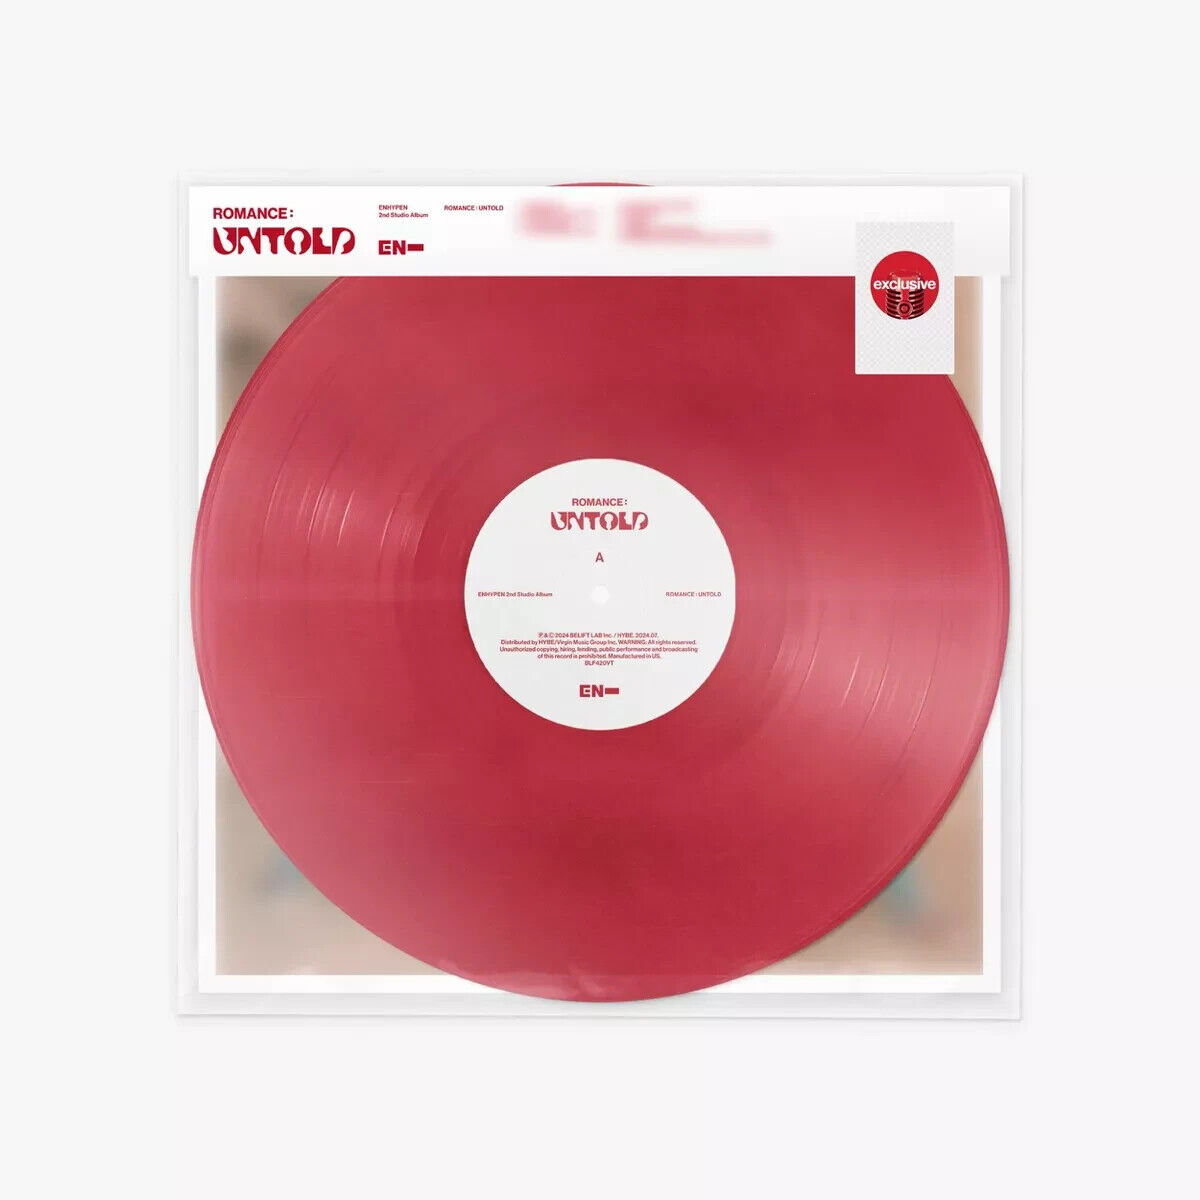 ENHYPEN 2nd Full Album - Romance: Untold RED VINYL Target Exclusive PRE ORDER